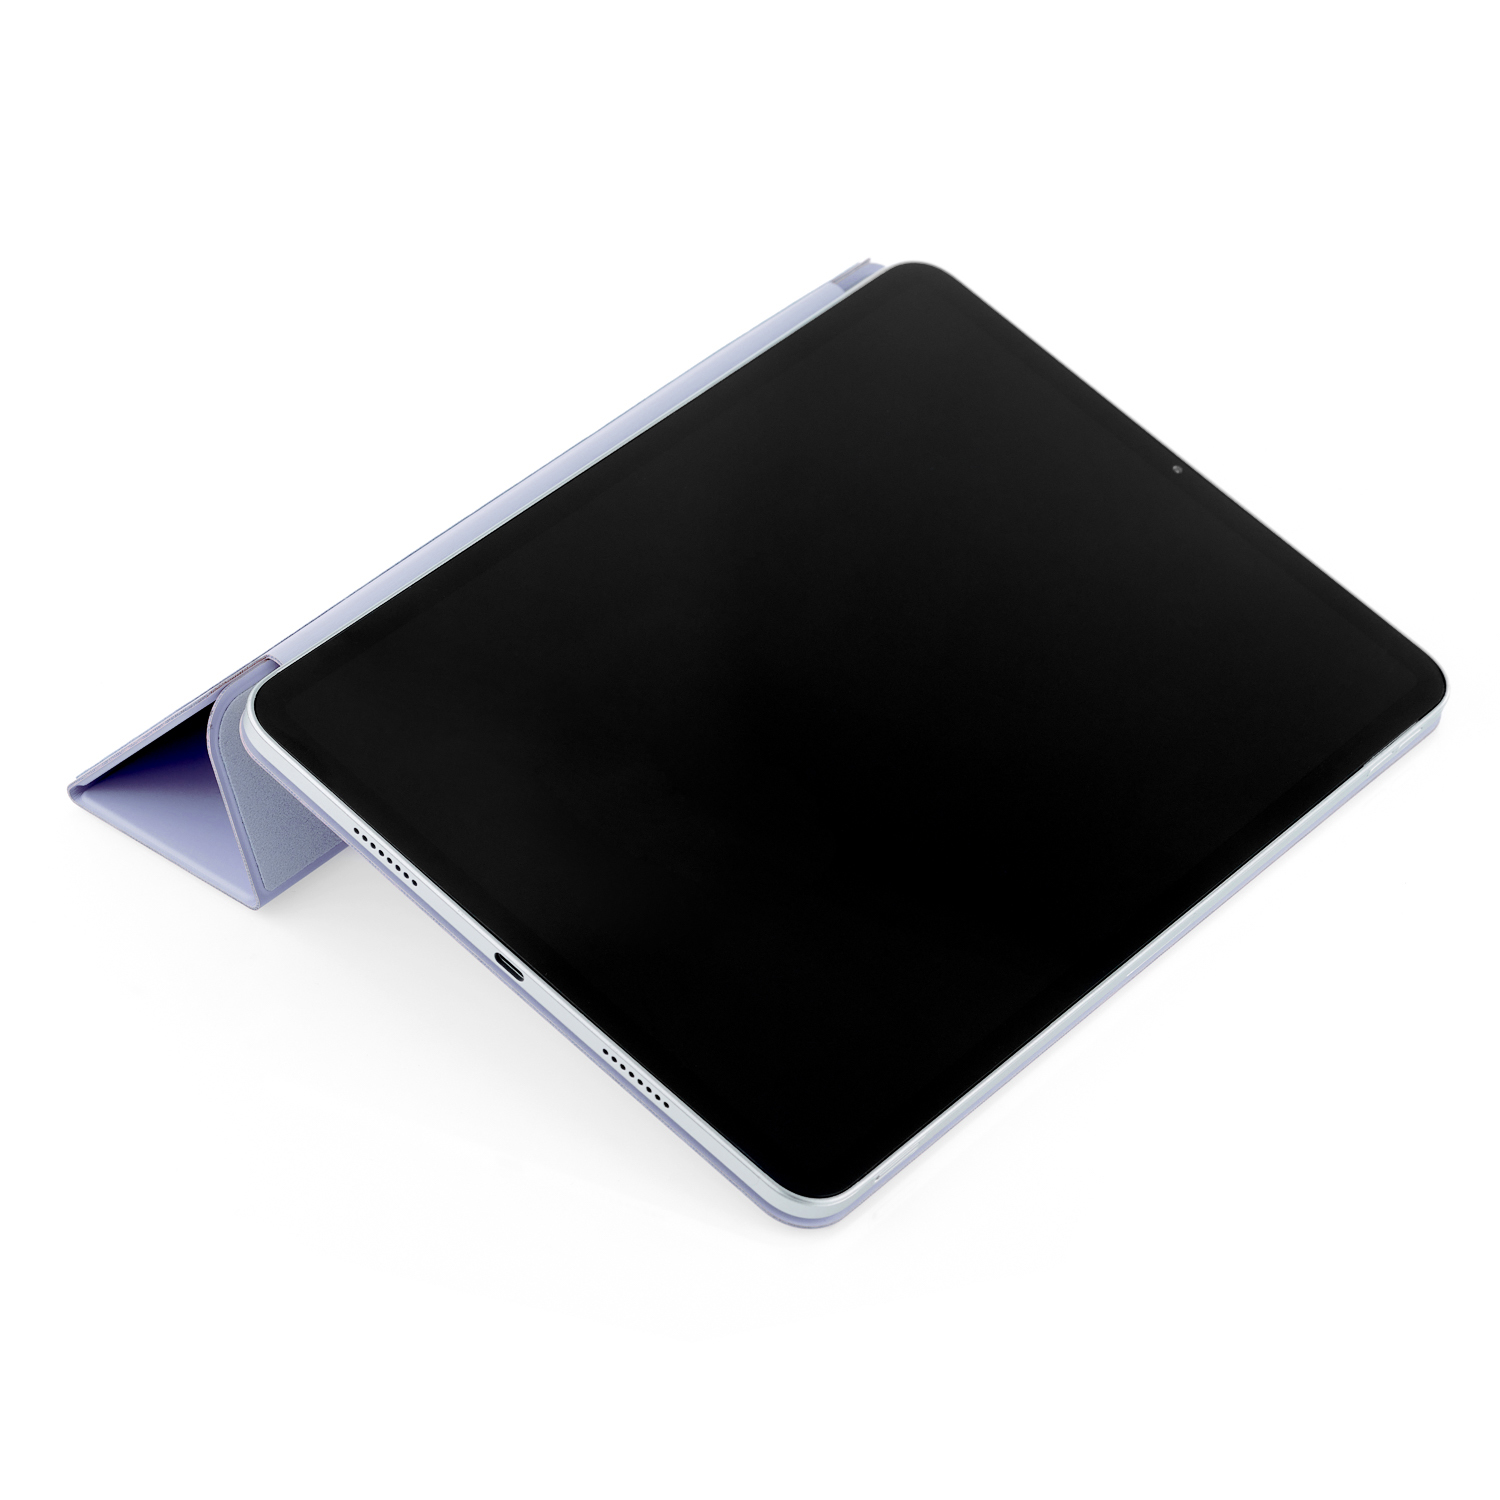 Чехол uBear Touch case для iPad Pro 11”, soft-touch, фиолетовый